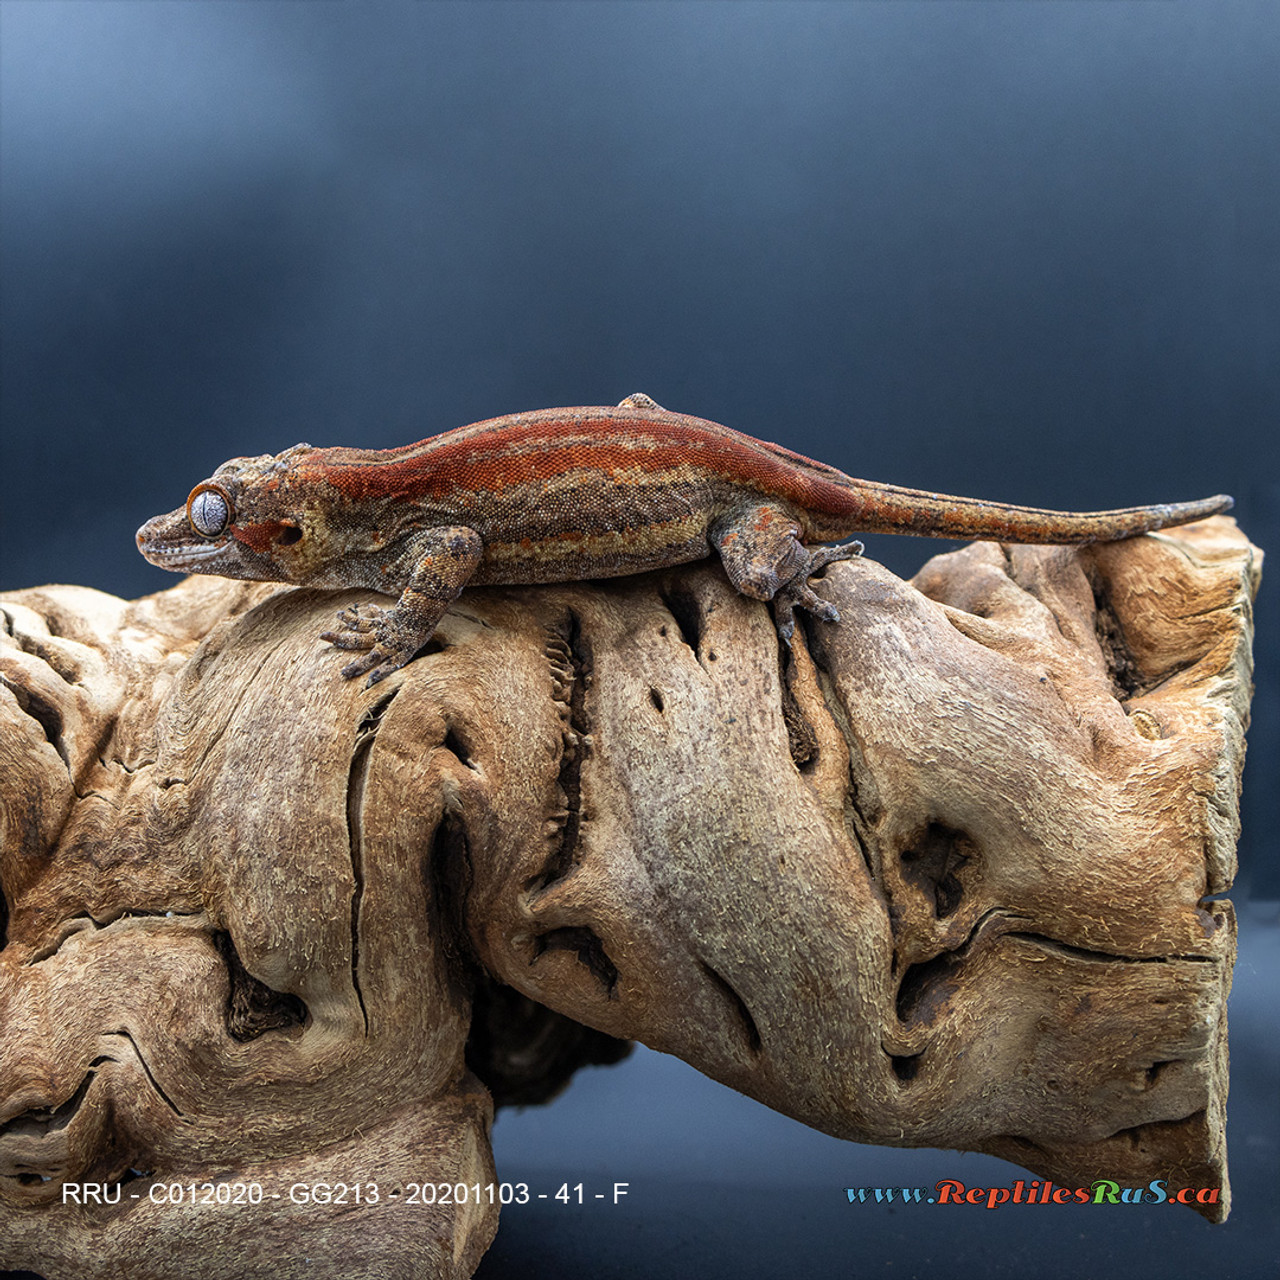 Gargoyle Gecko (41g Female) GG213  Proven Breeder - See Notes